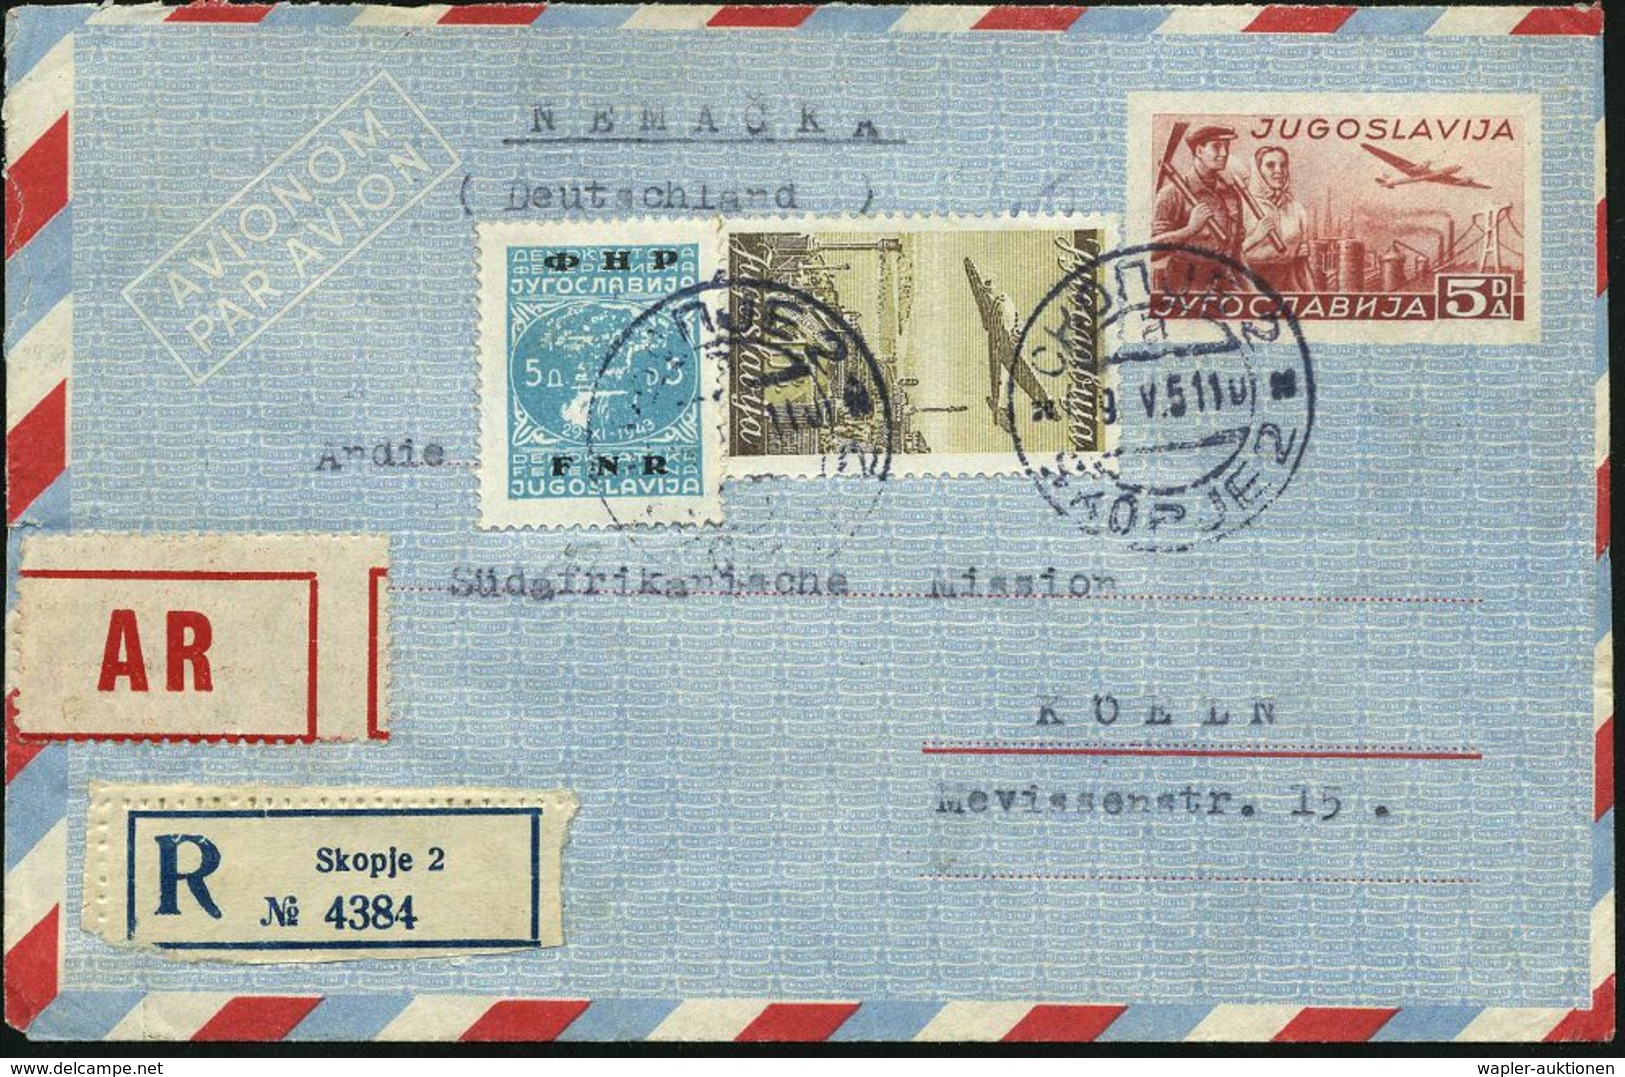 JUGOSLAWIEN 1951 Aerogramm 5 Din. Industrie, Rotbr., Zusatzfrankatur 10 Din.Flp. (Mi.519 U.a.) Bl. RZ: Skopje 2 + Roter  - Autres (Air)